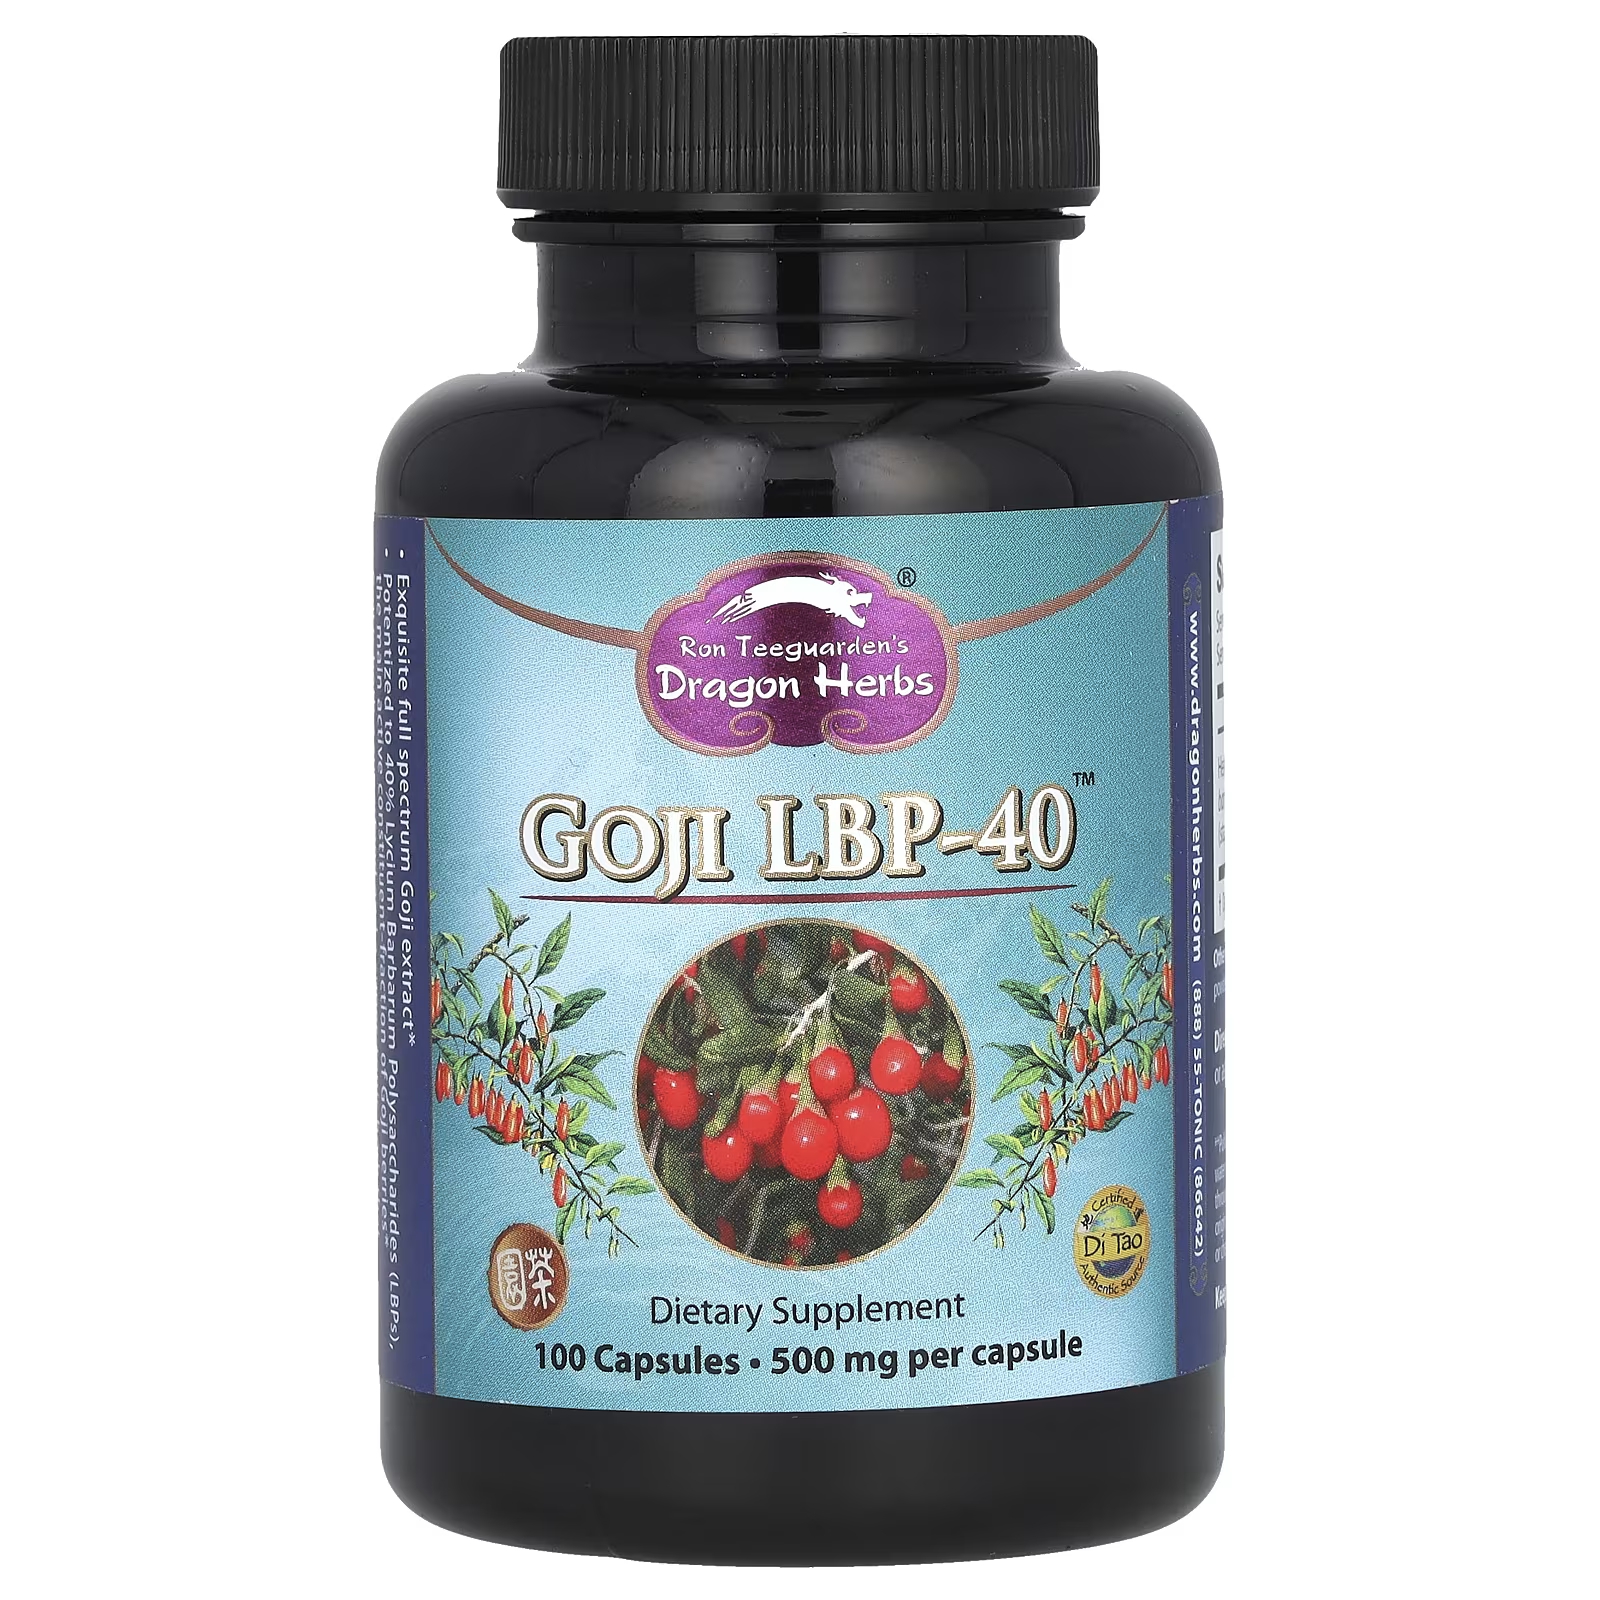 Пищевая добавка Dragon Herbs Ron Teeguarden LBP-40 1500 мг годжи, 100 капсул